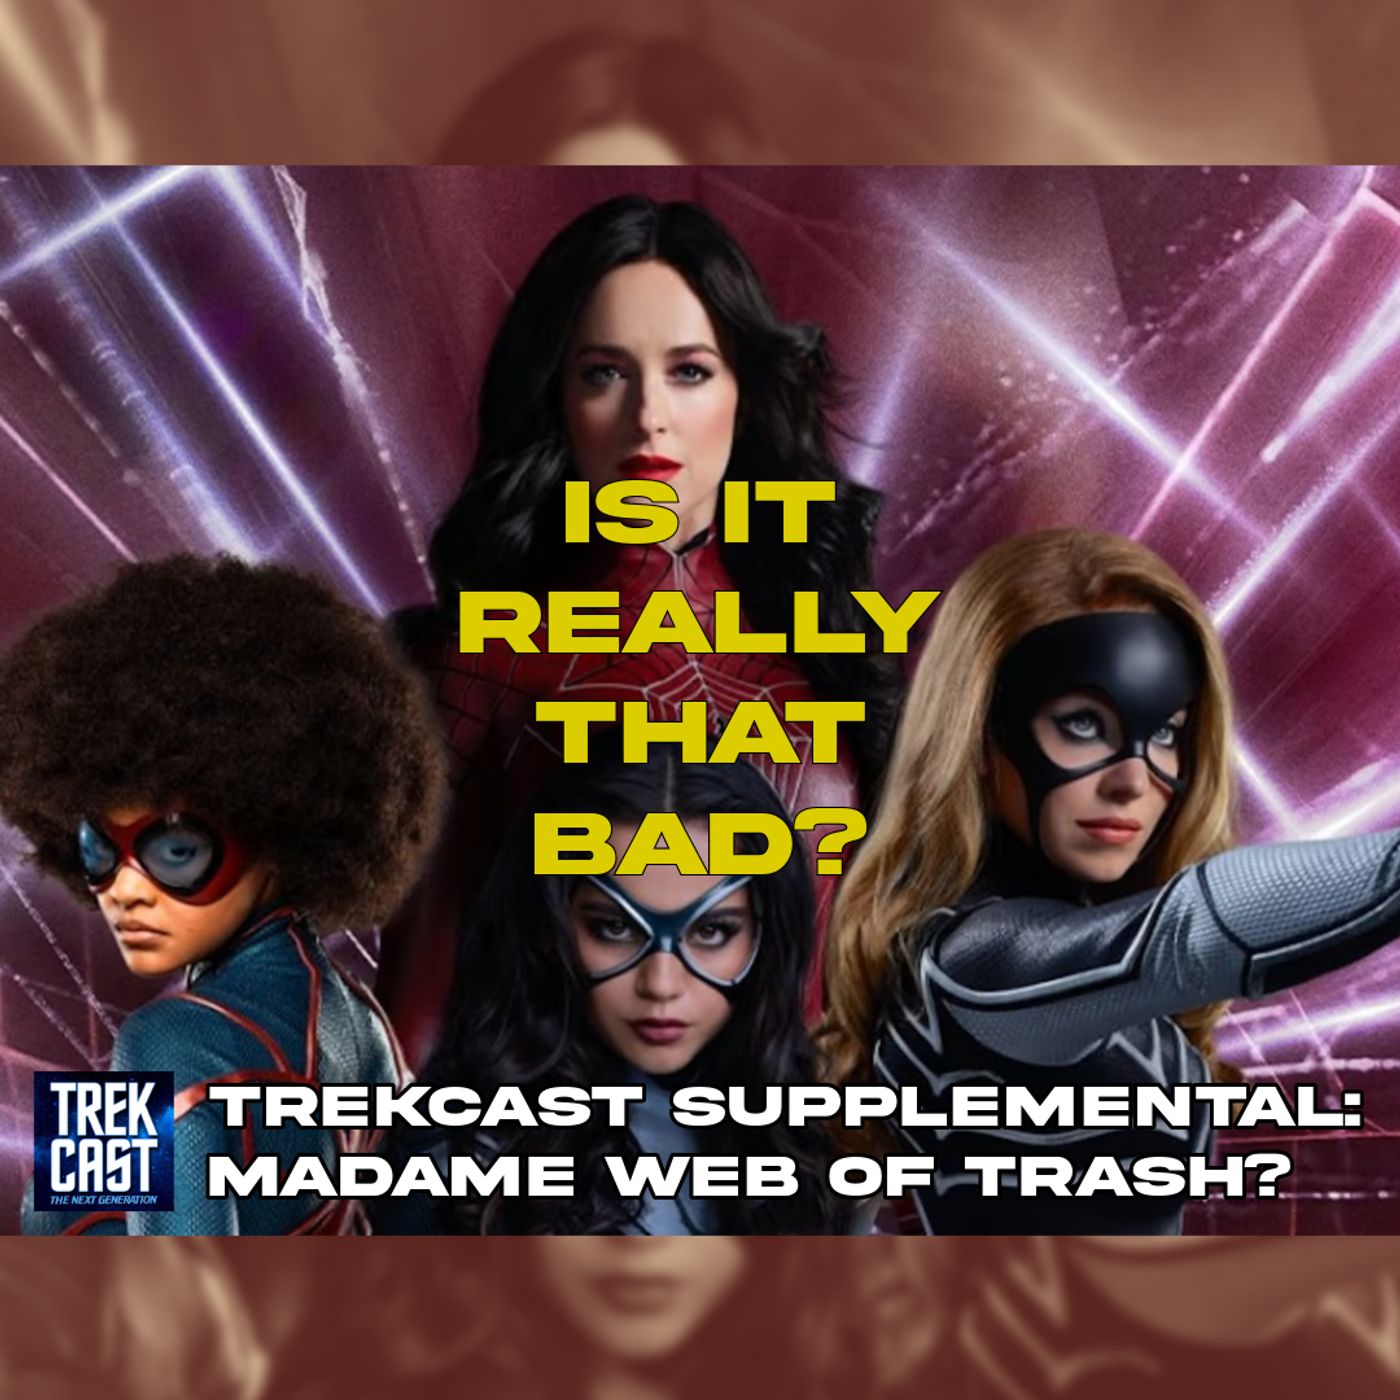 Trekcast Supplemental: Madame Web of Trash?